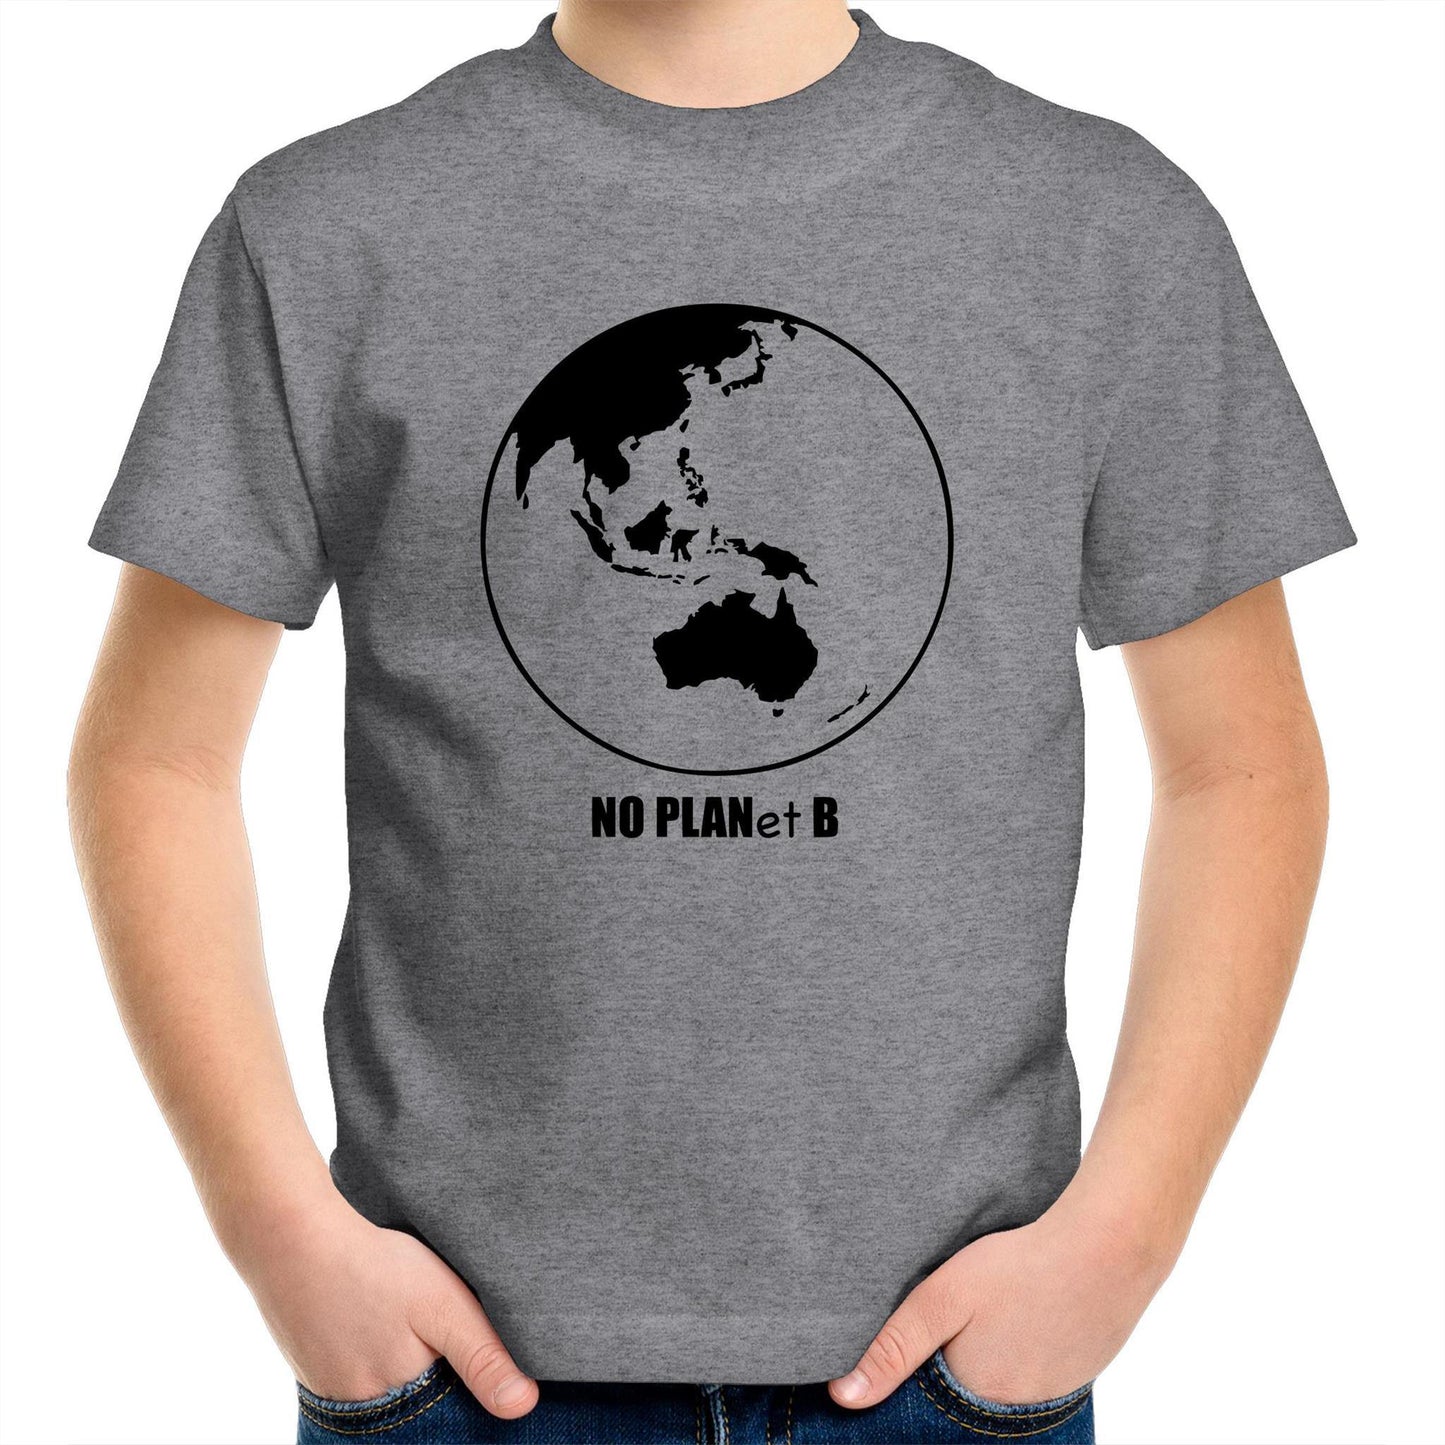 No Planet B - Kids Youth Crew T-Shirt Grey Marle Kids Youth T-shirt Environment